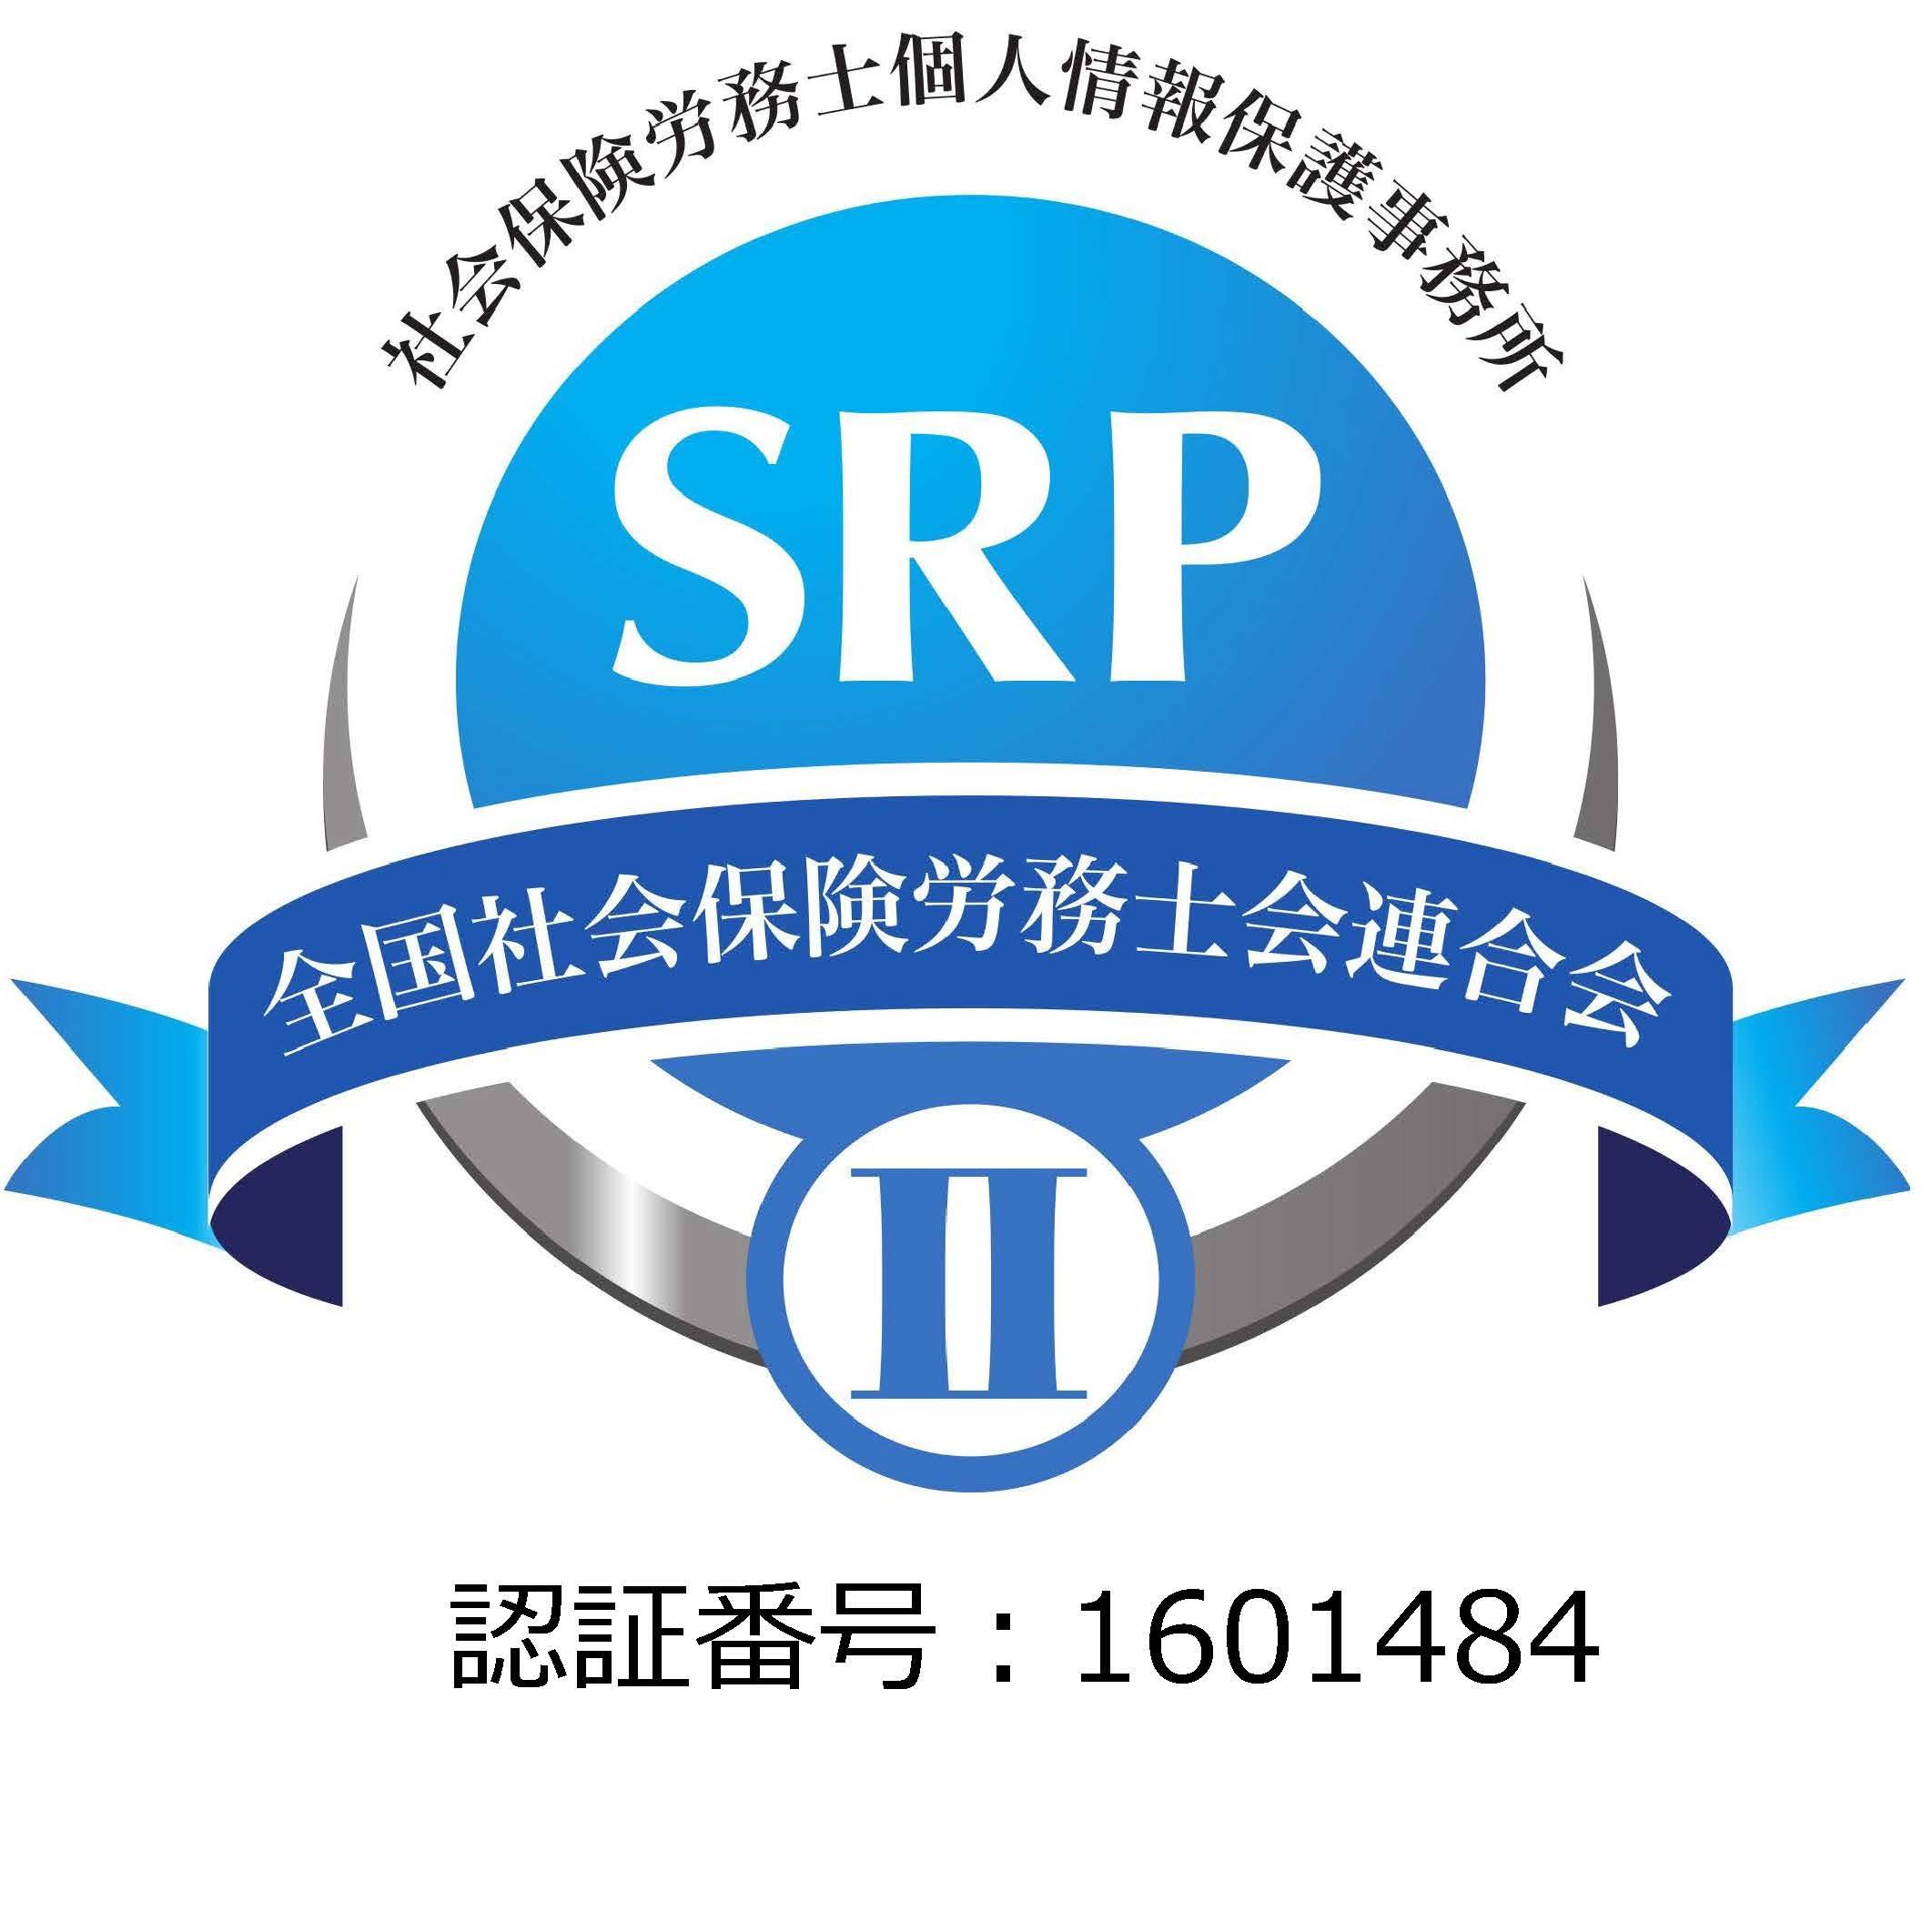 SRPⅡ認証事務所